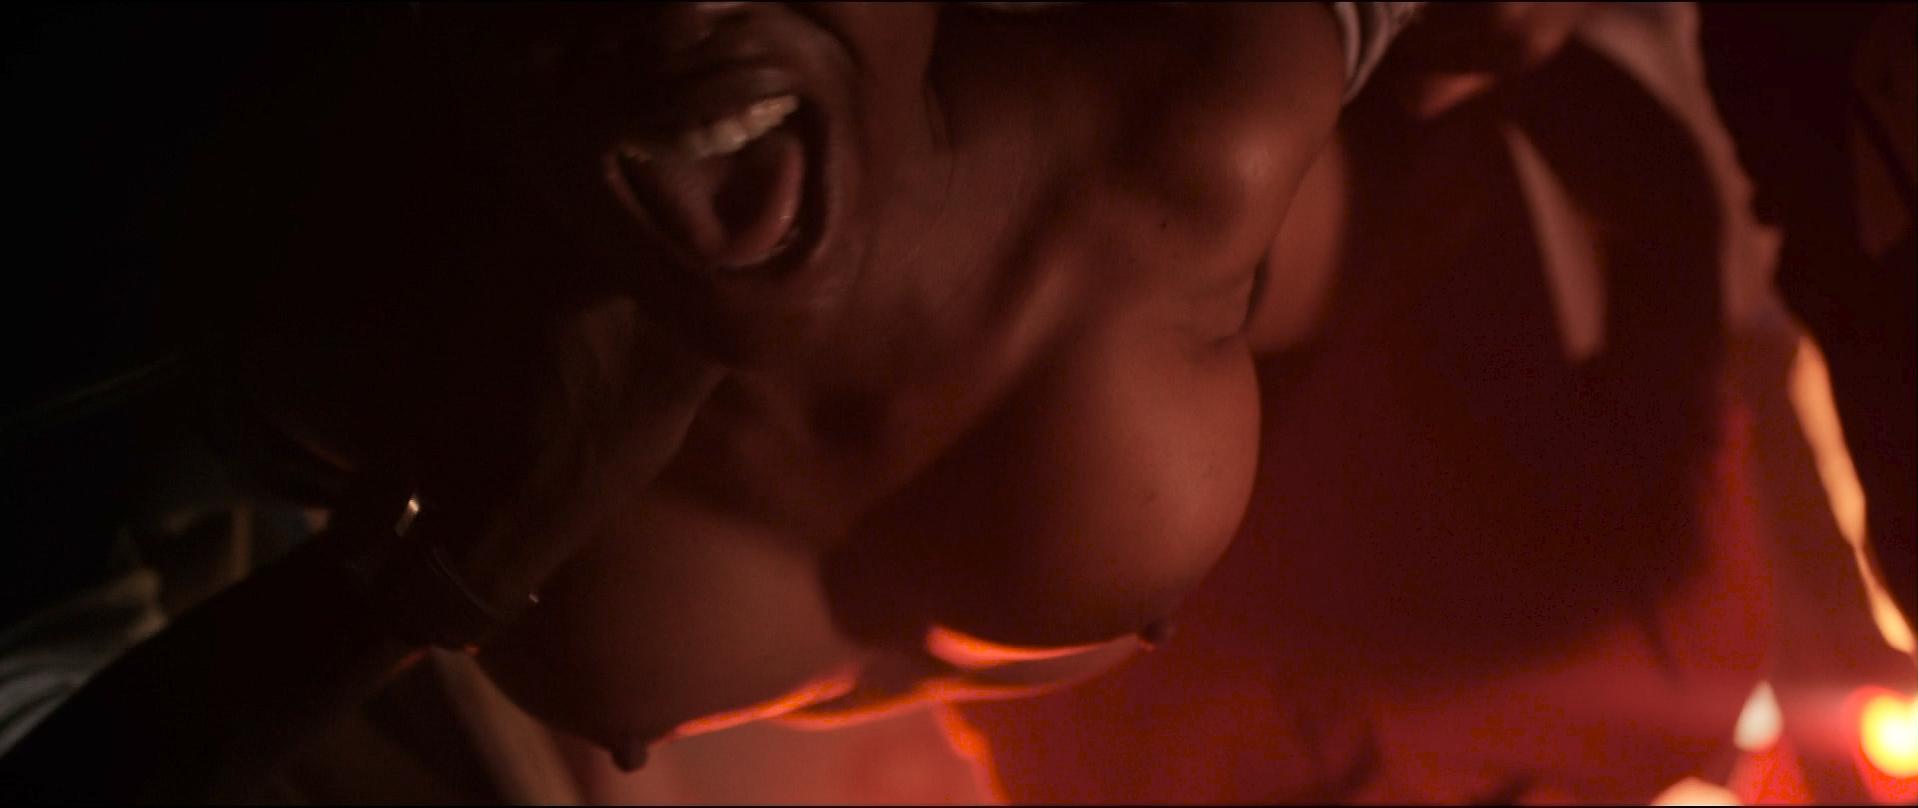 Black celebrity movie sex scenes